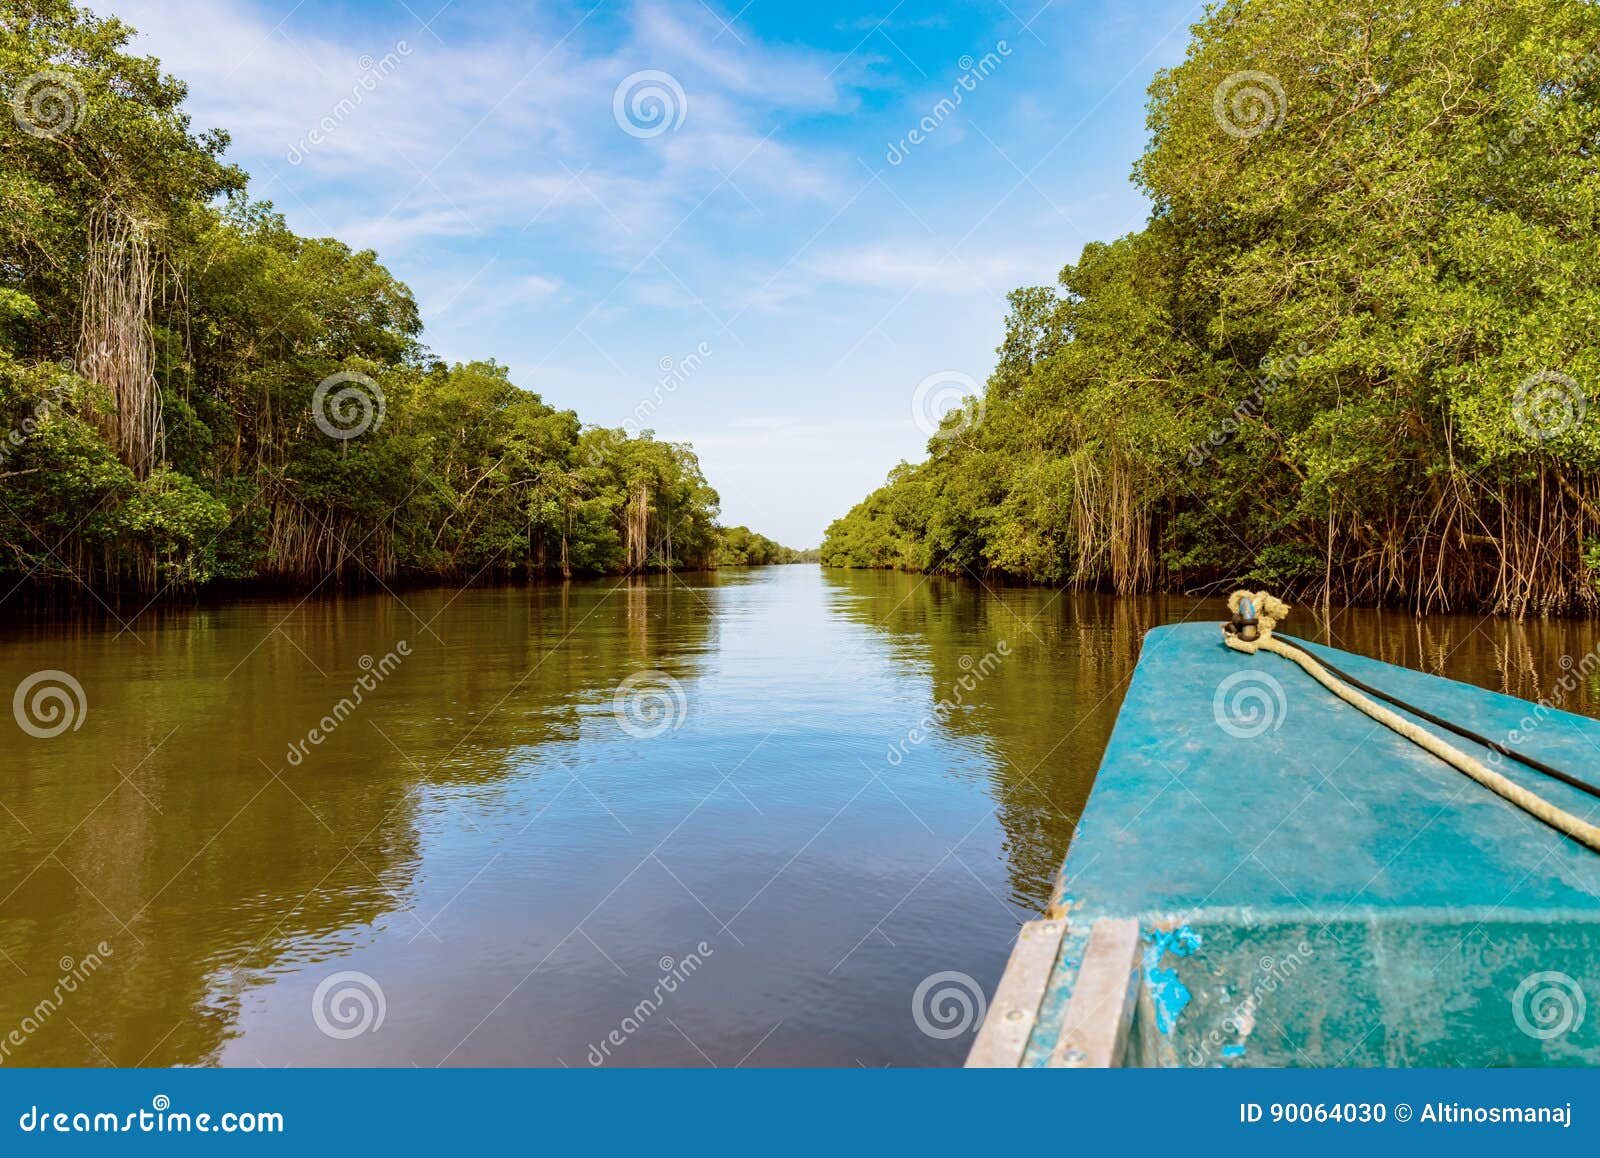 caroni river boat ride through dense mangroves reflection nature trinidad and tobago